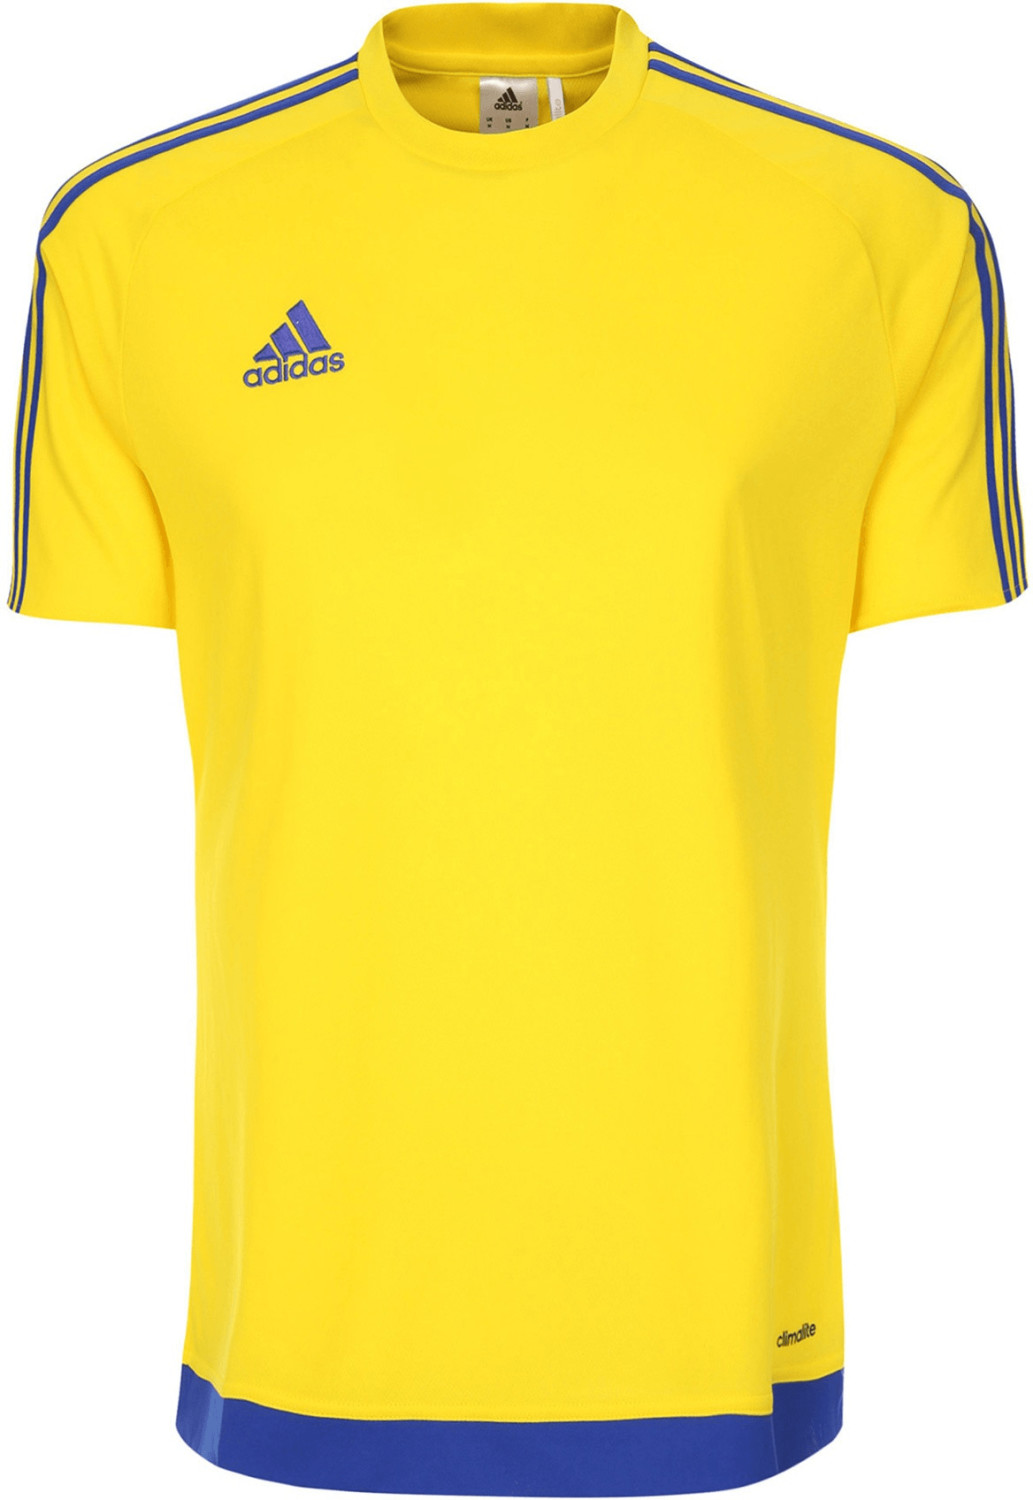 Adidas Estro 15 Jersey Junior yellow/bold blue